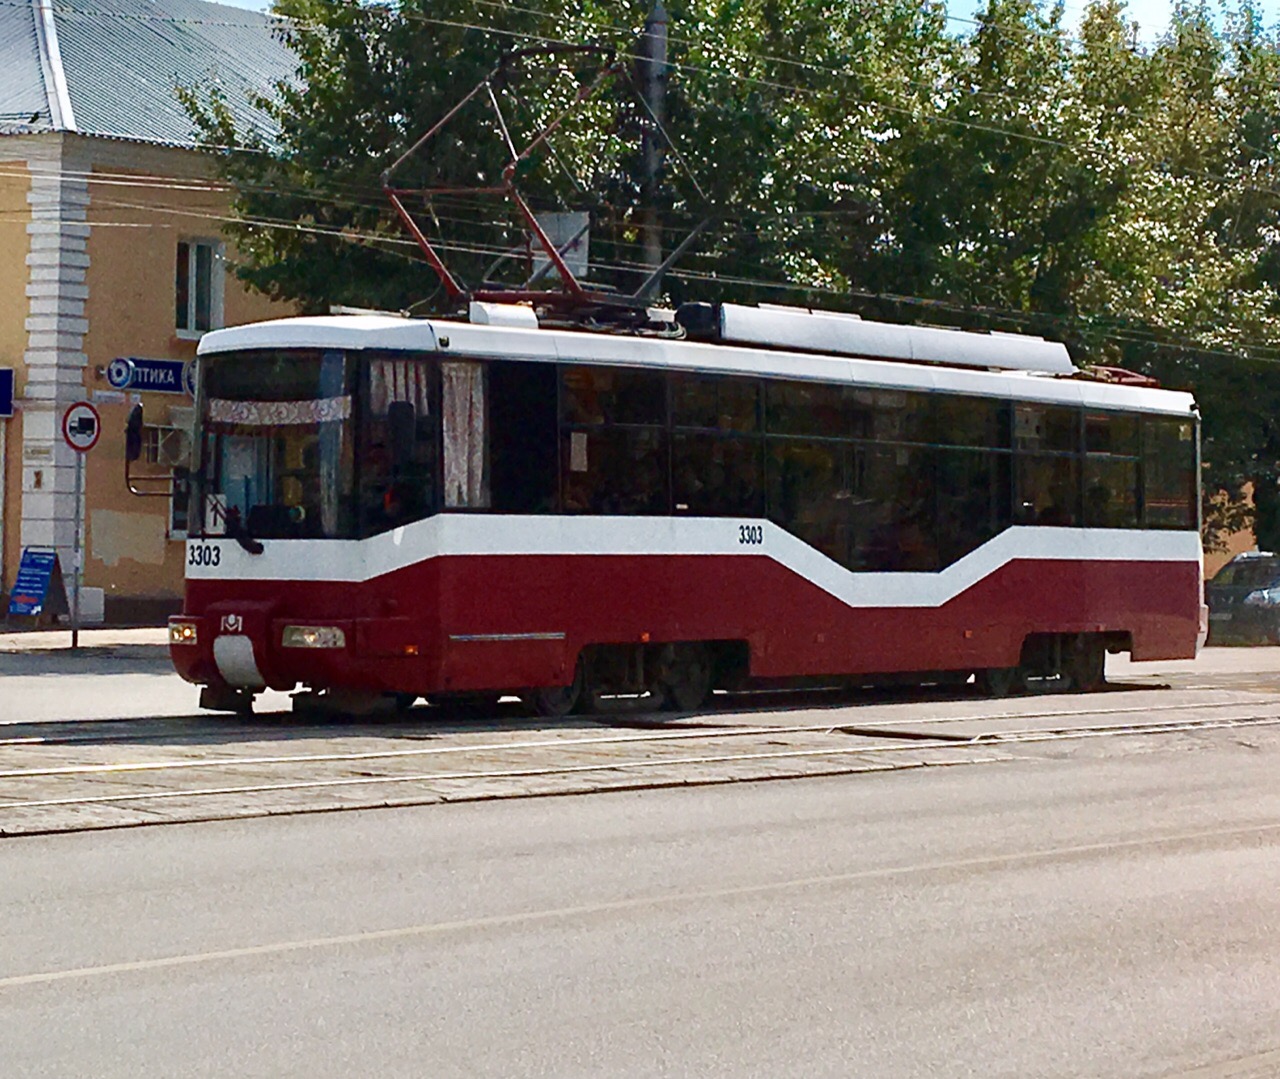 Трамвай 4 барнаул. Трамвай в Барнауле 1041. Трамвайная система Барнаул. Барнаульский трамвай трамвай.